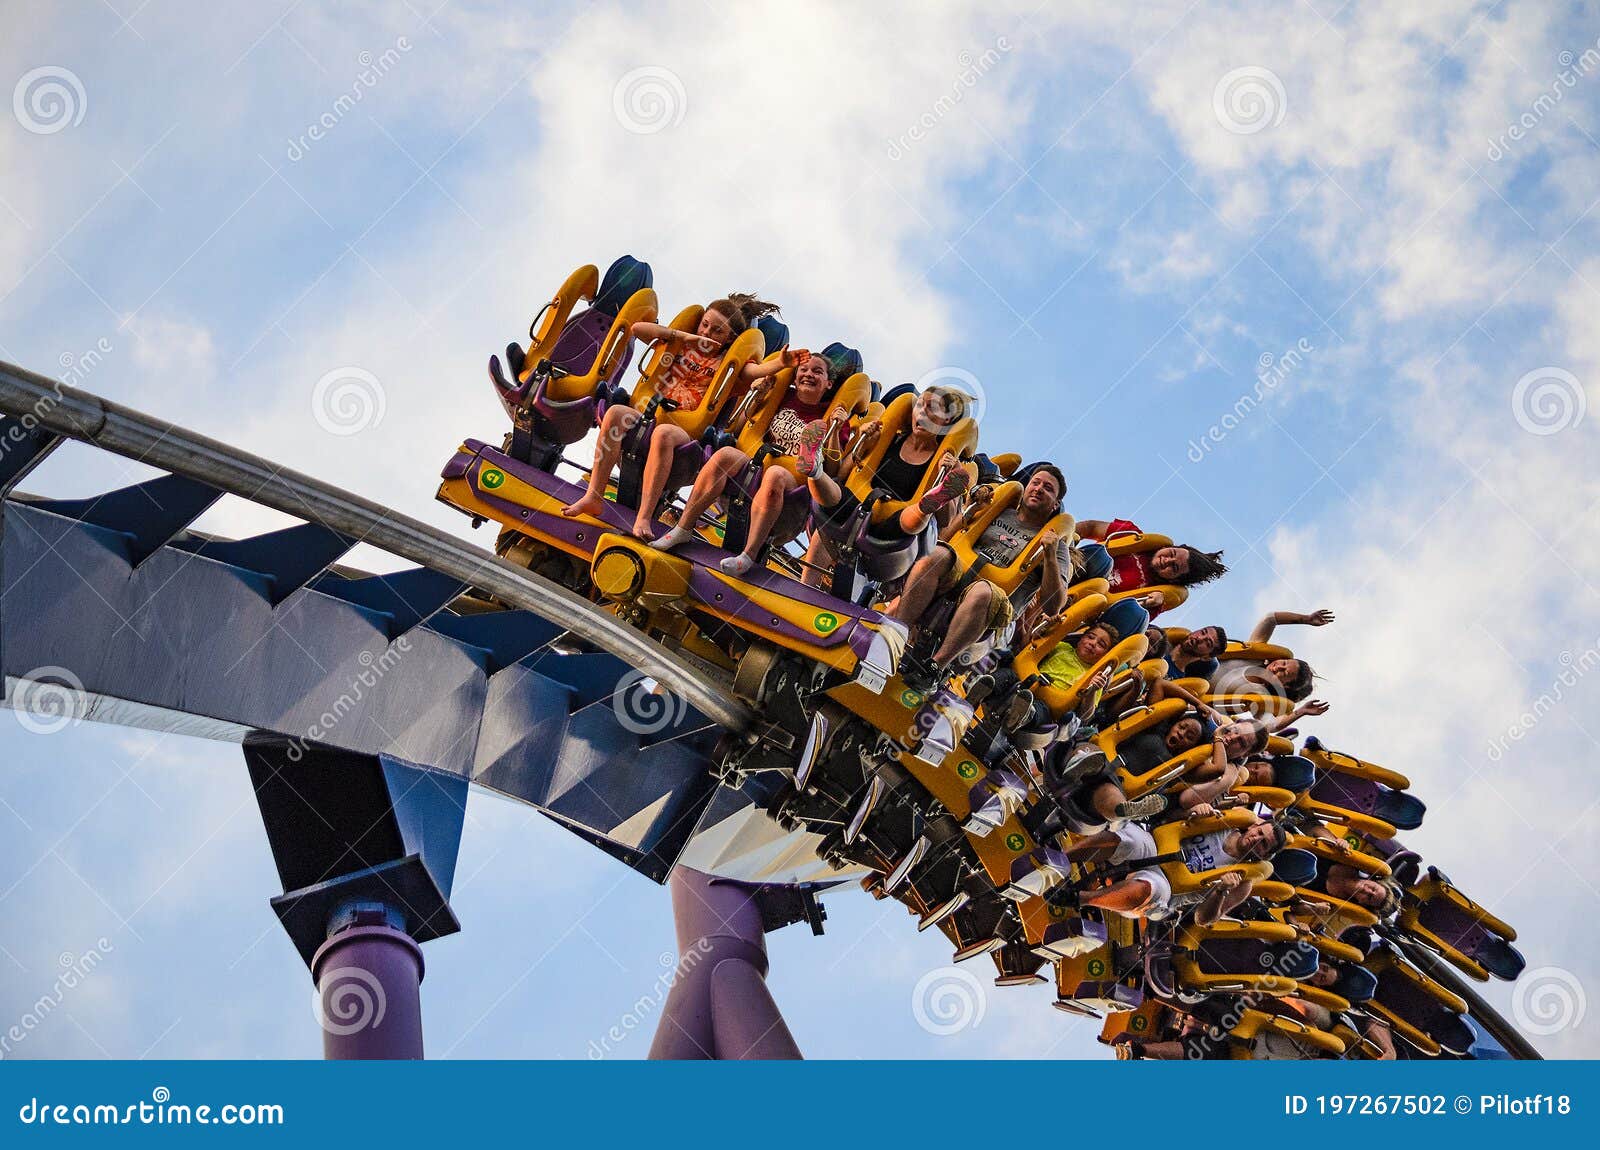 Bizarro Roller Coaster at Six Adventure in Jackson Township, New Jersey, USA Editorial Photography - Image of coaster, destination: 197267502